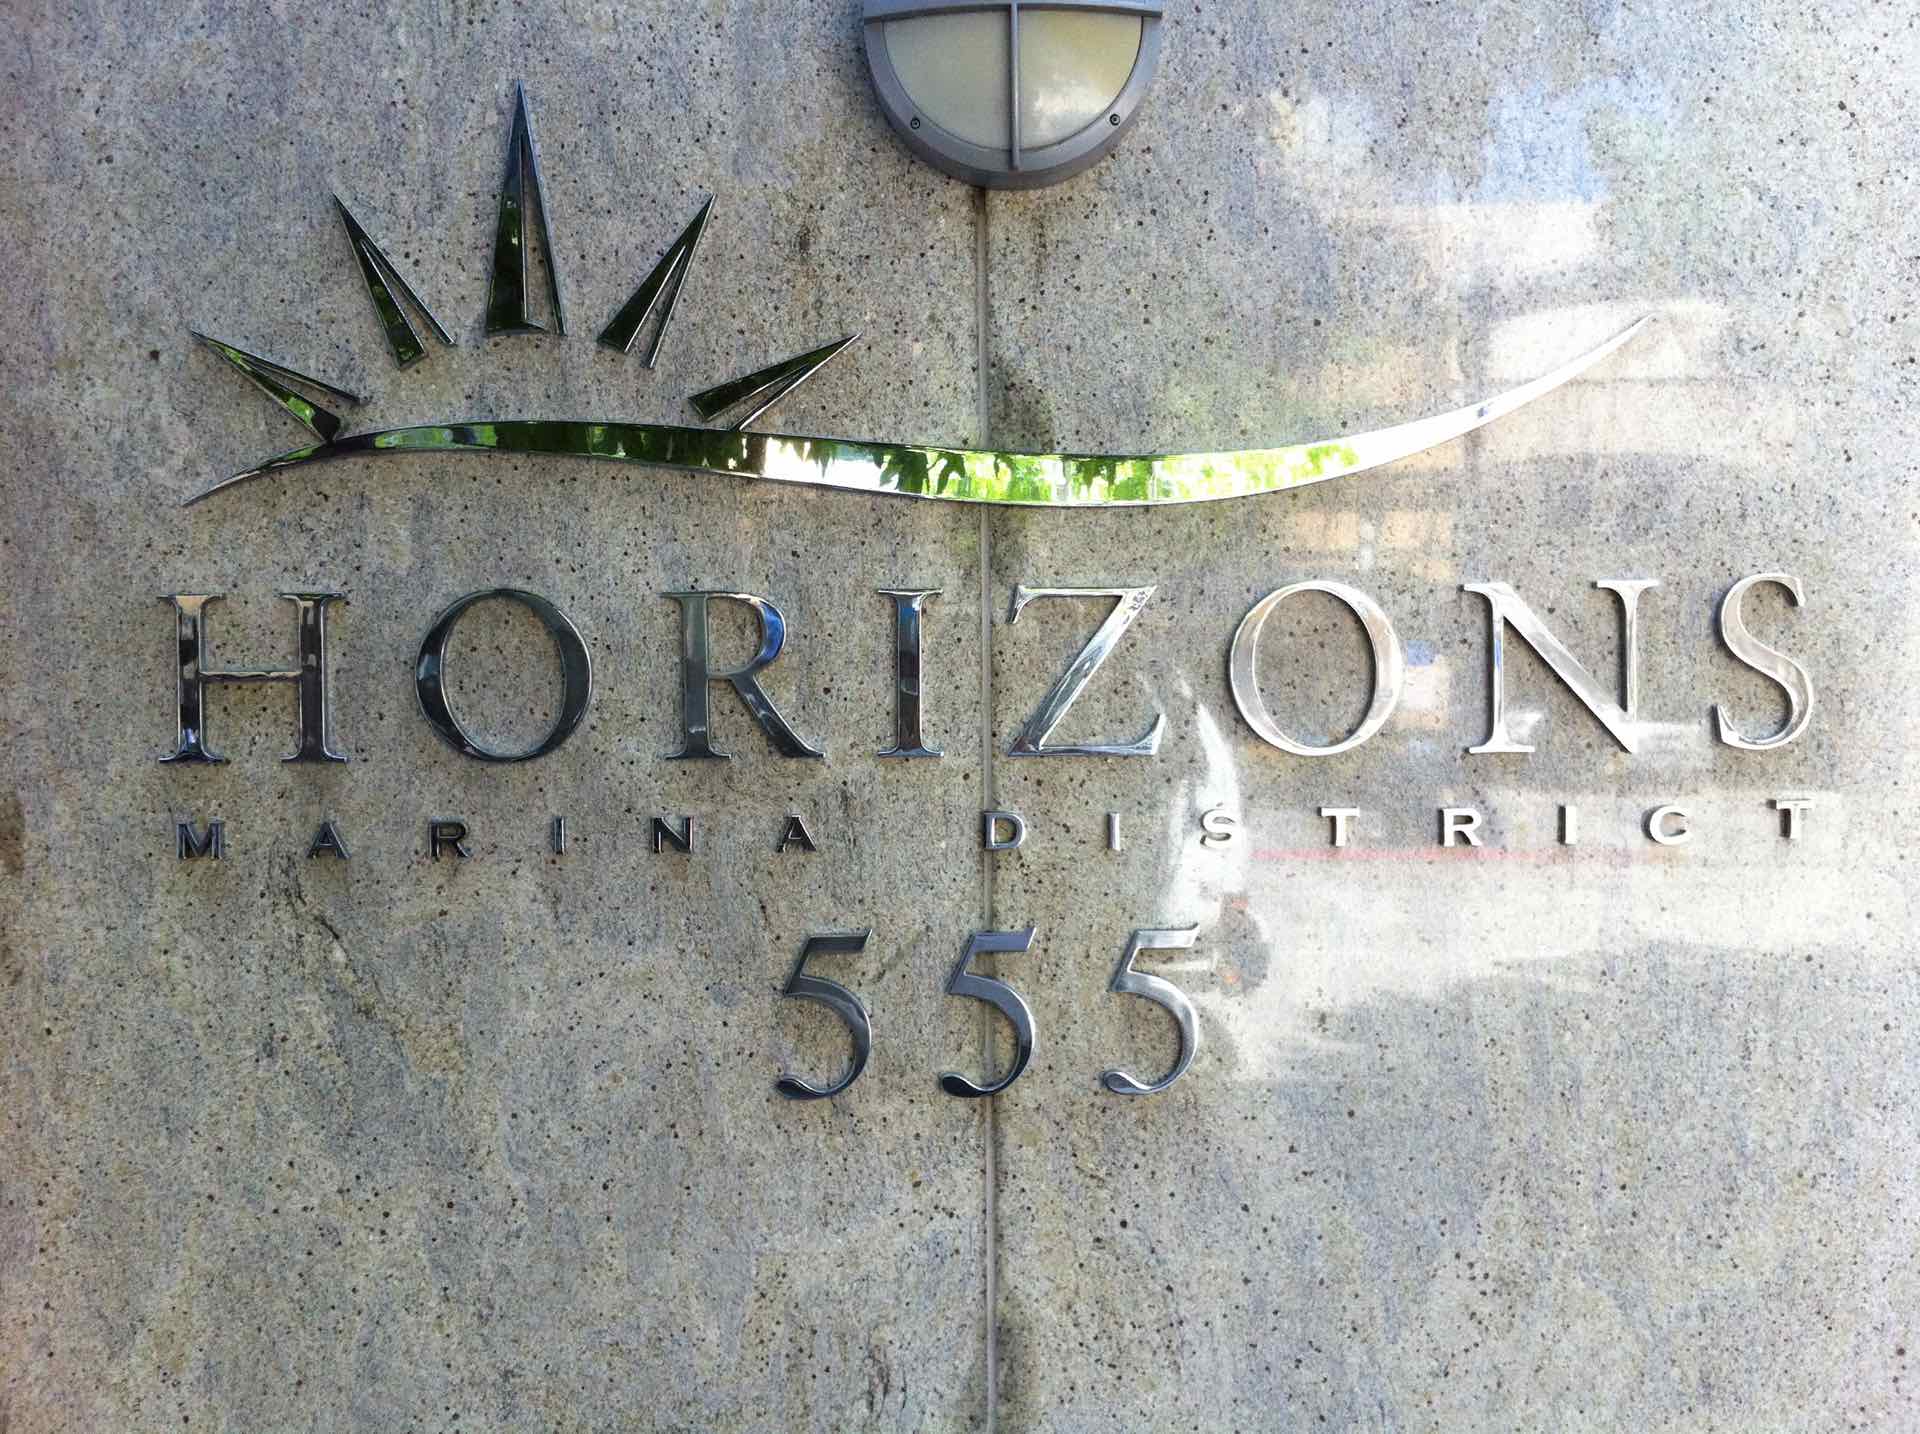 Building sign that says 'Horizons Marina District'